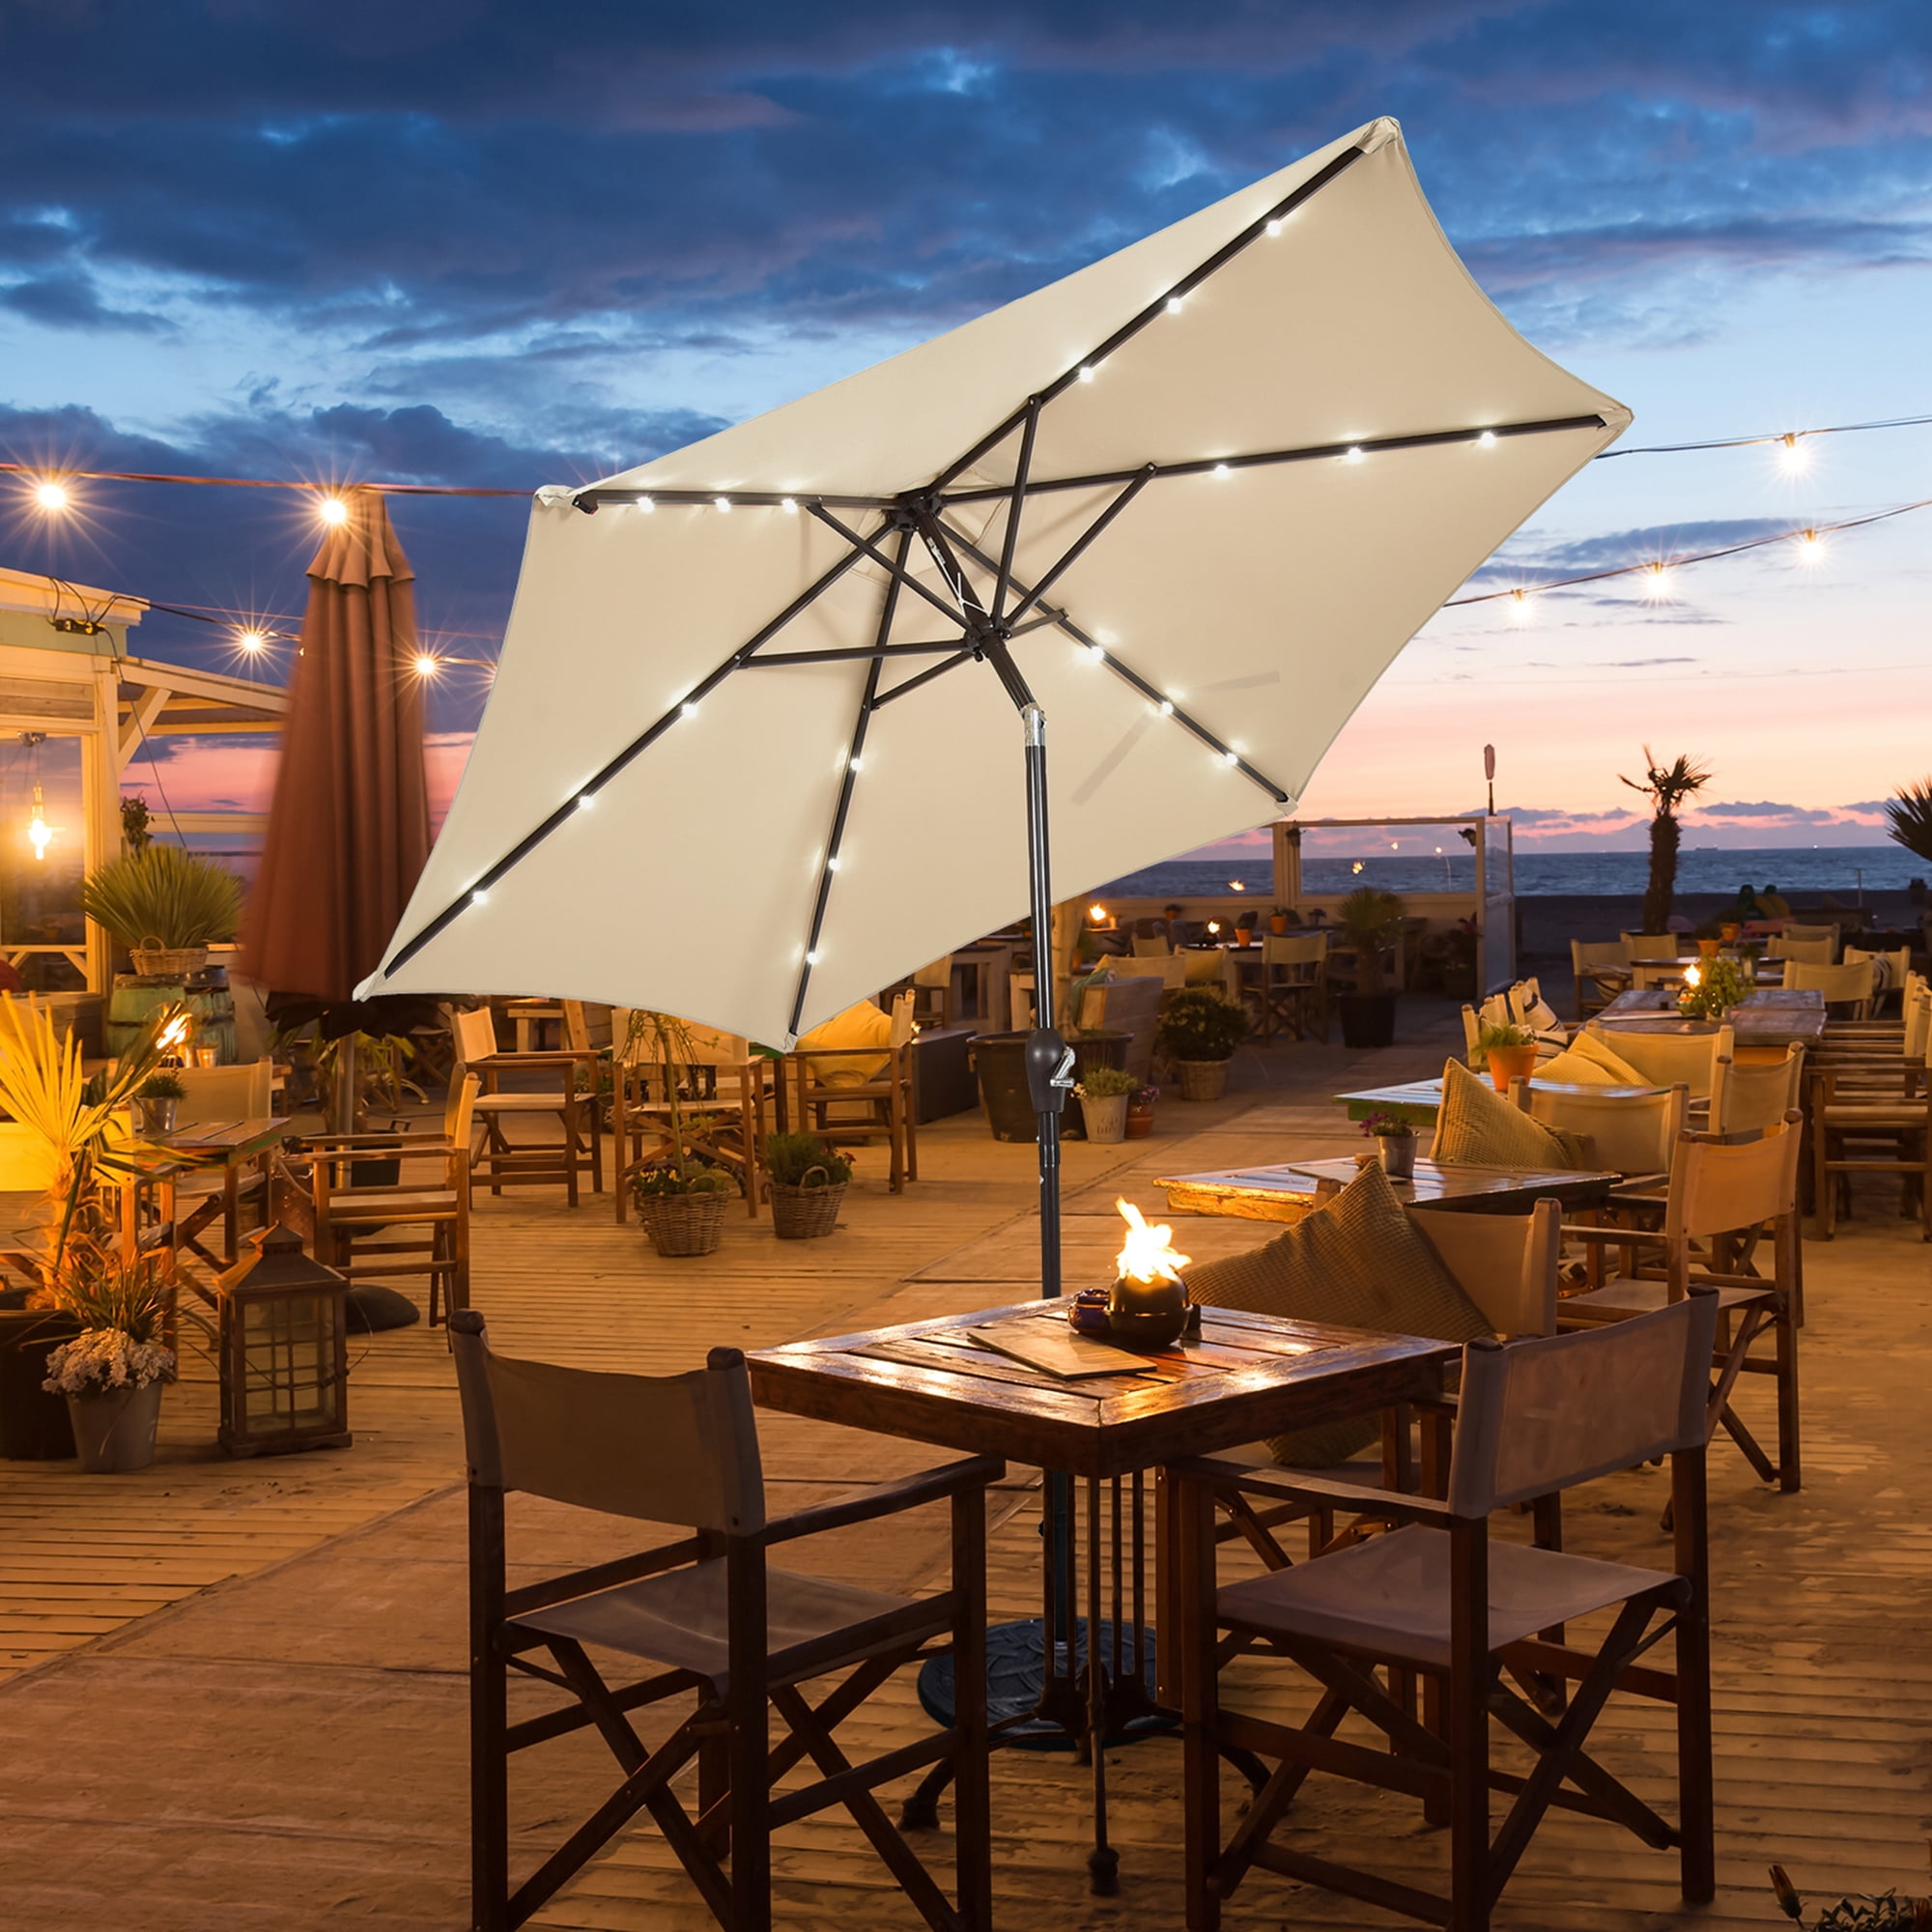 Gymax 9 Ft Patio Table Market Umbrella, How To Add Lights Outdoor Umbrella